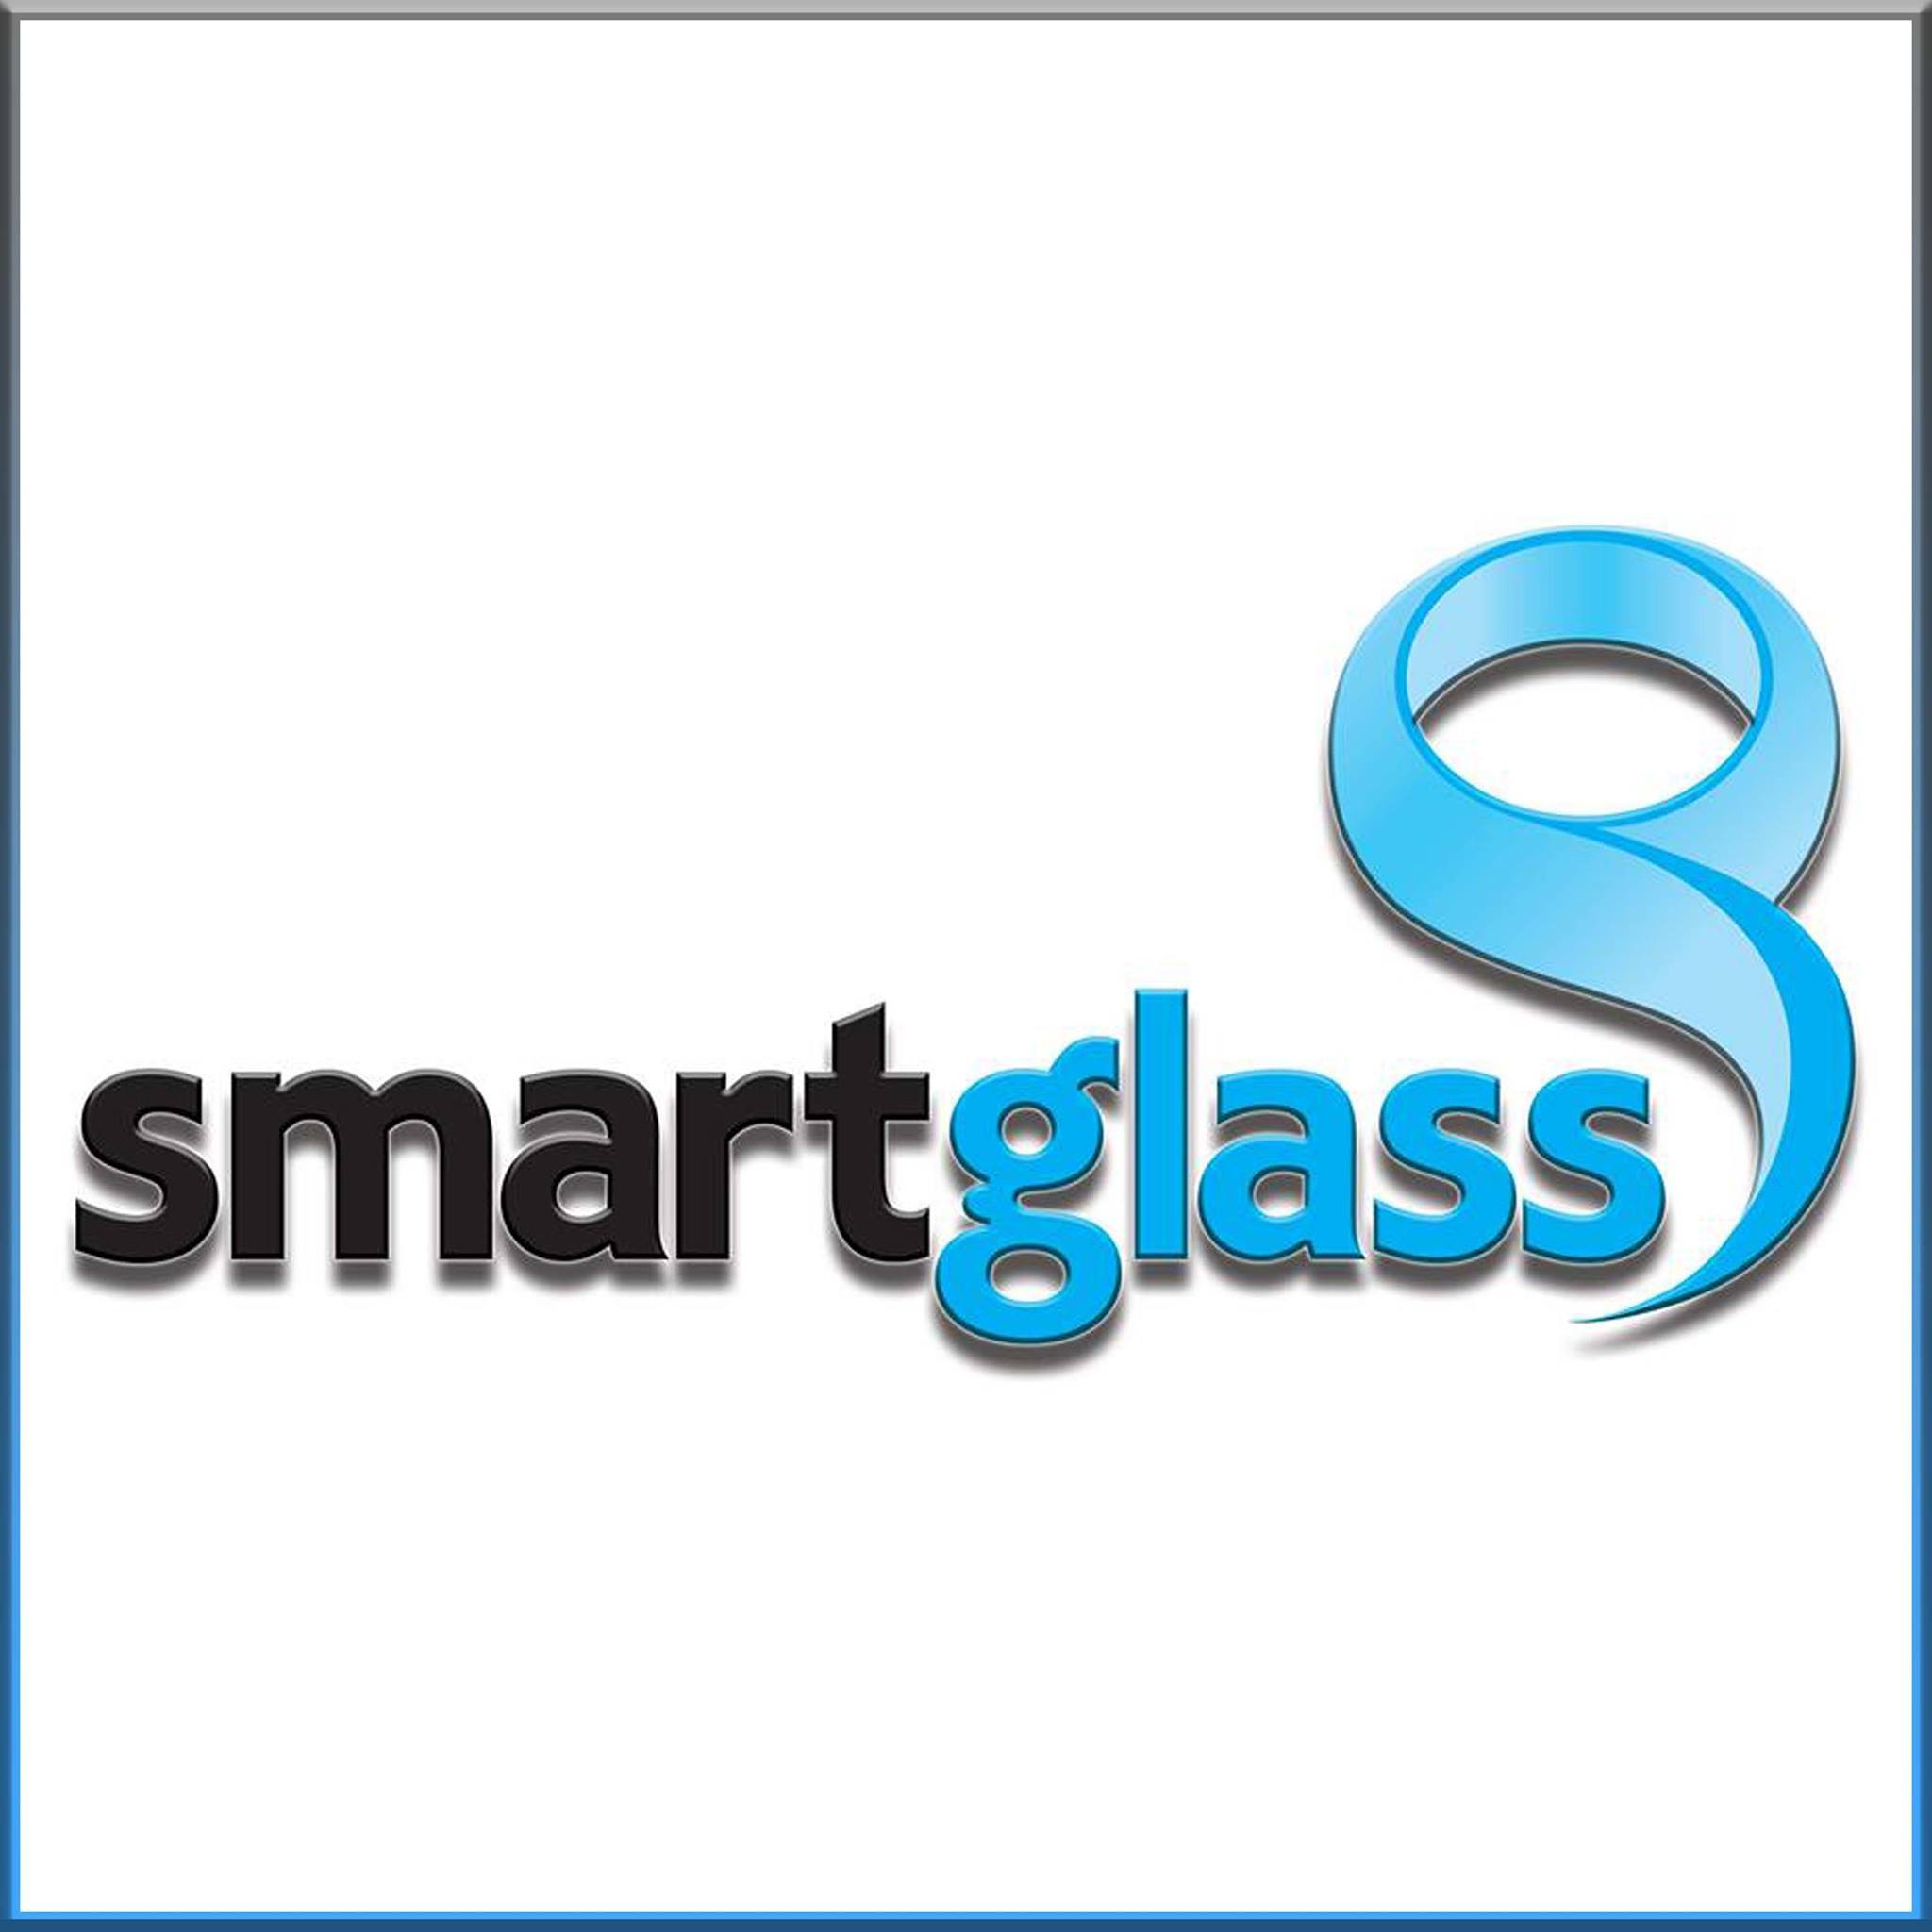 Smart Glass Company